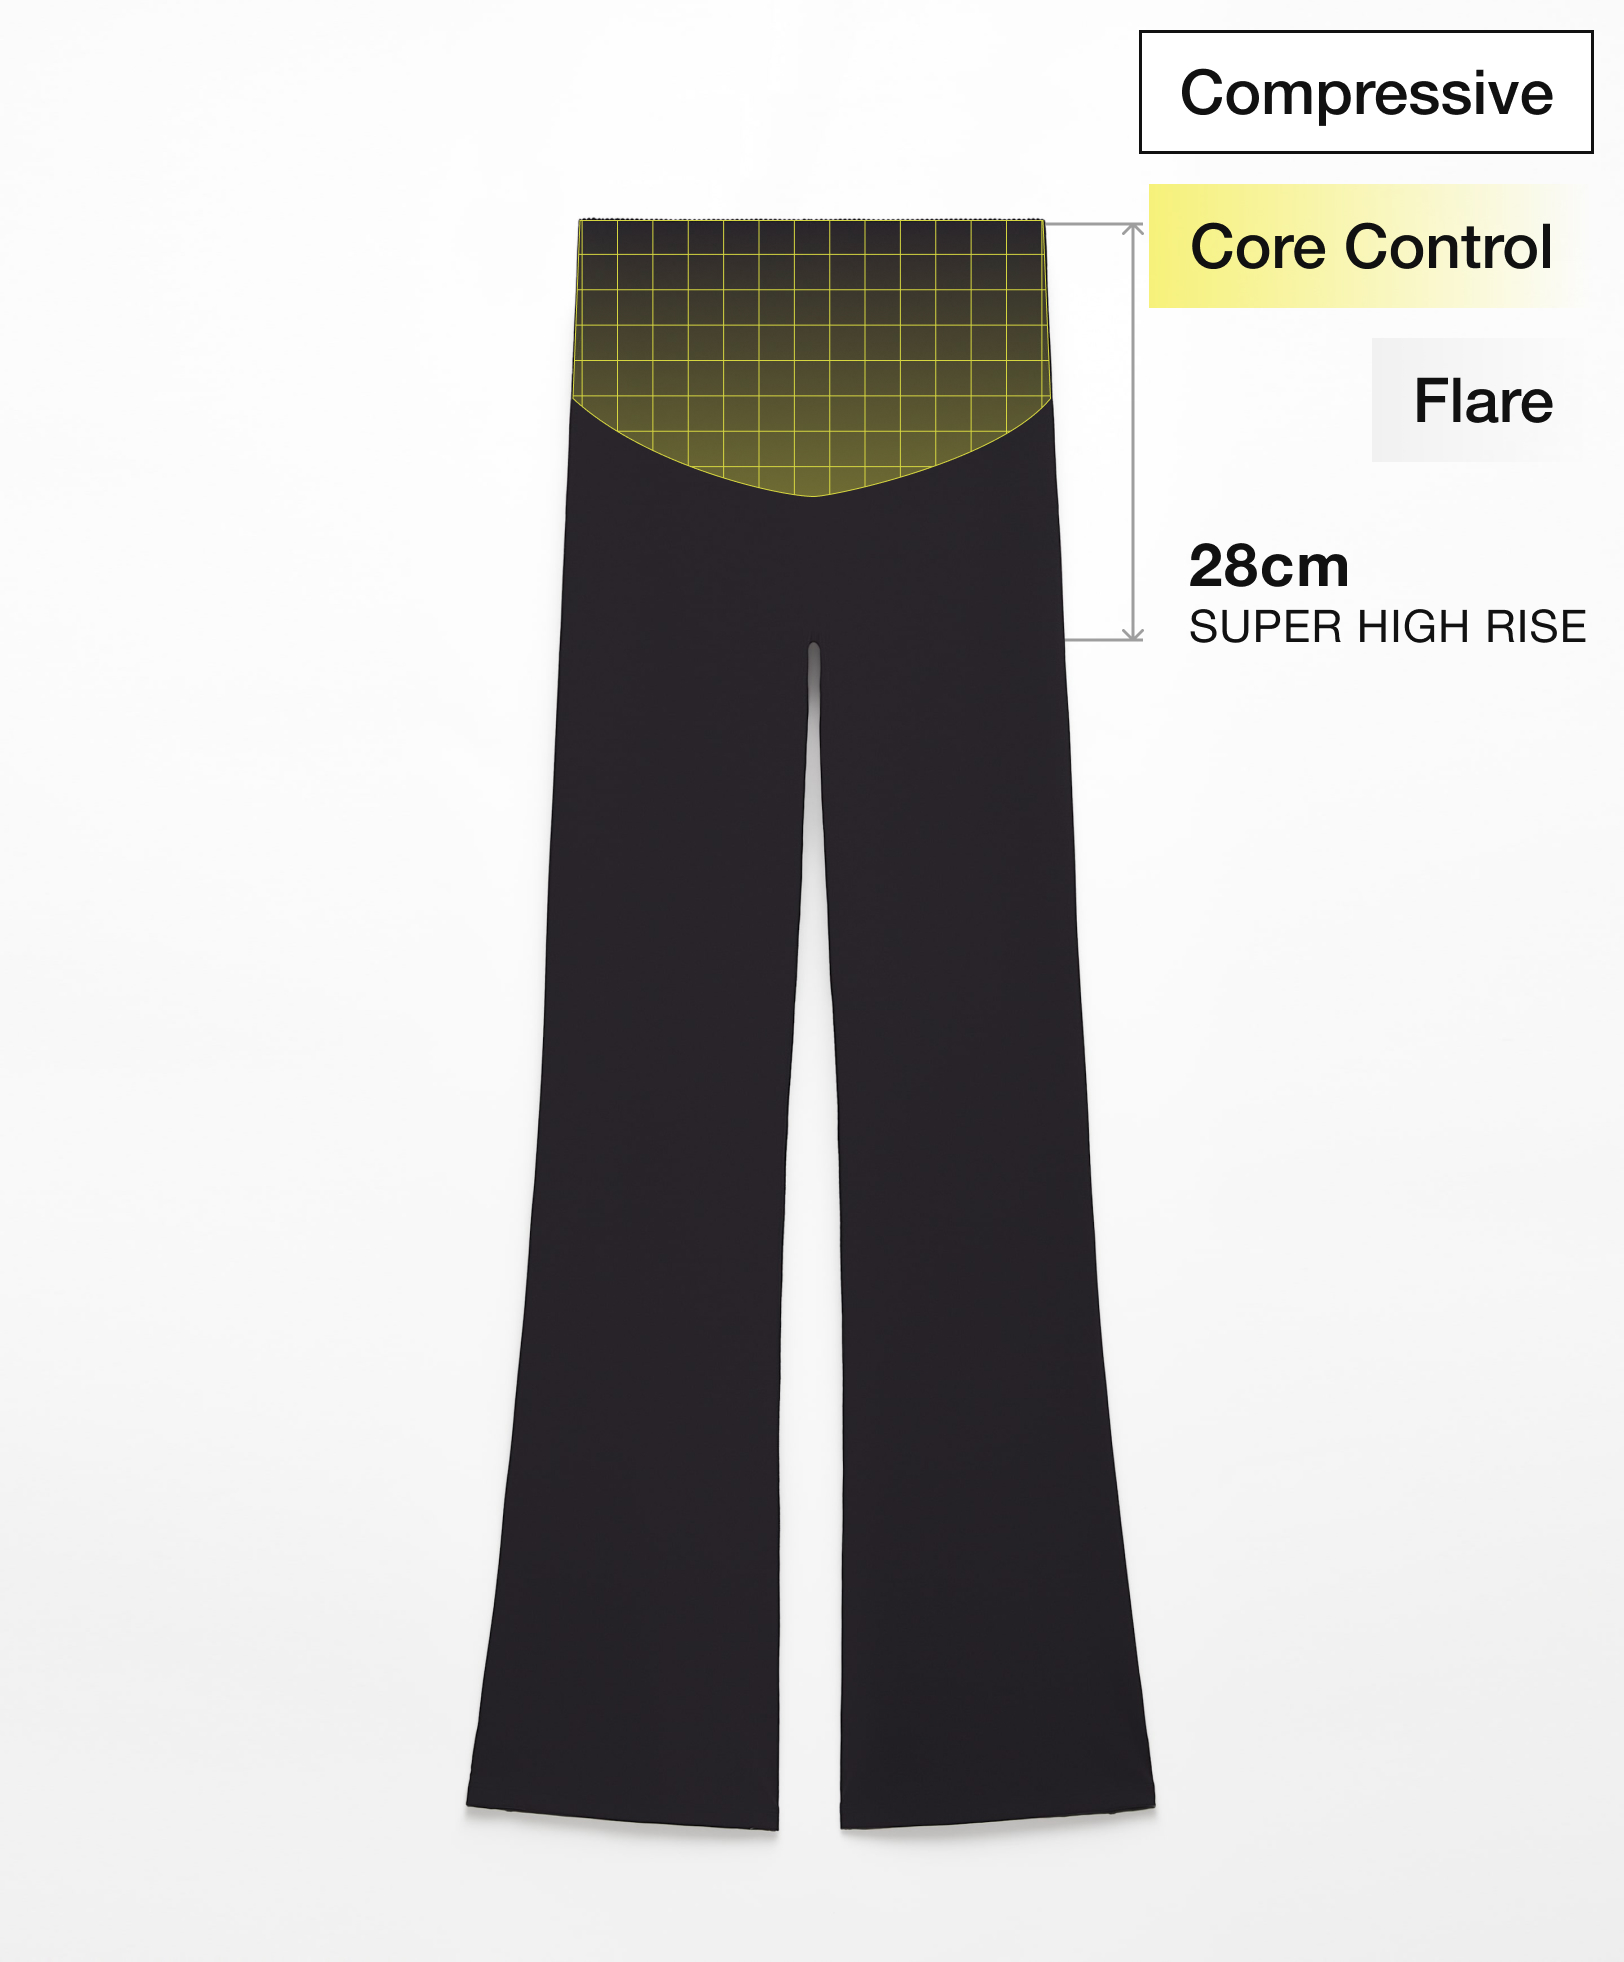 Pantalón flare super high rise compressive core control